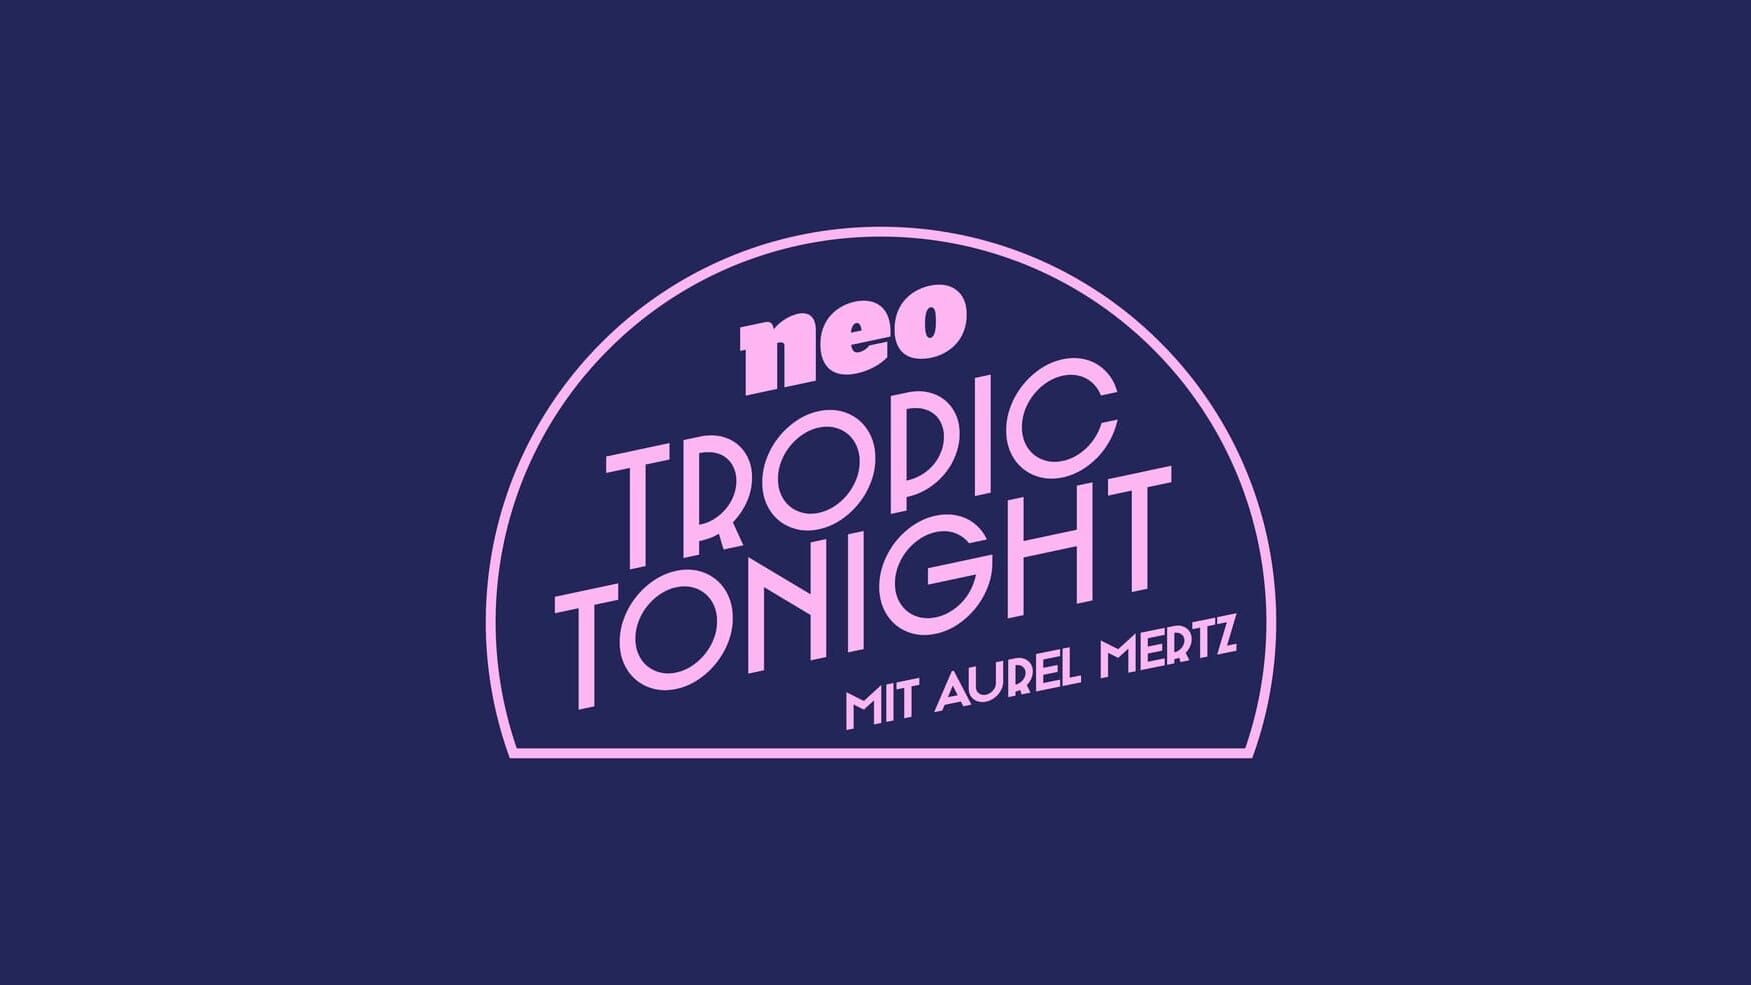 Neo Tropic Tonight